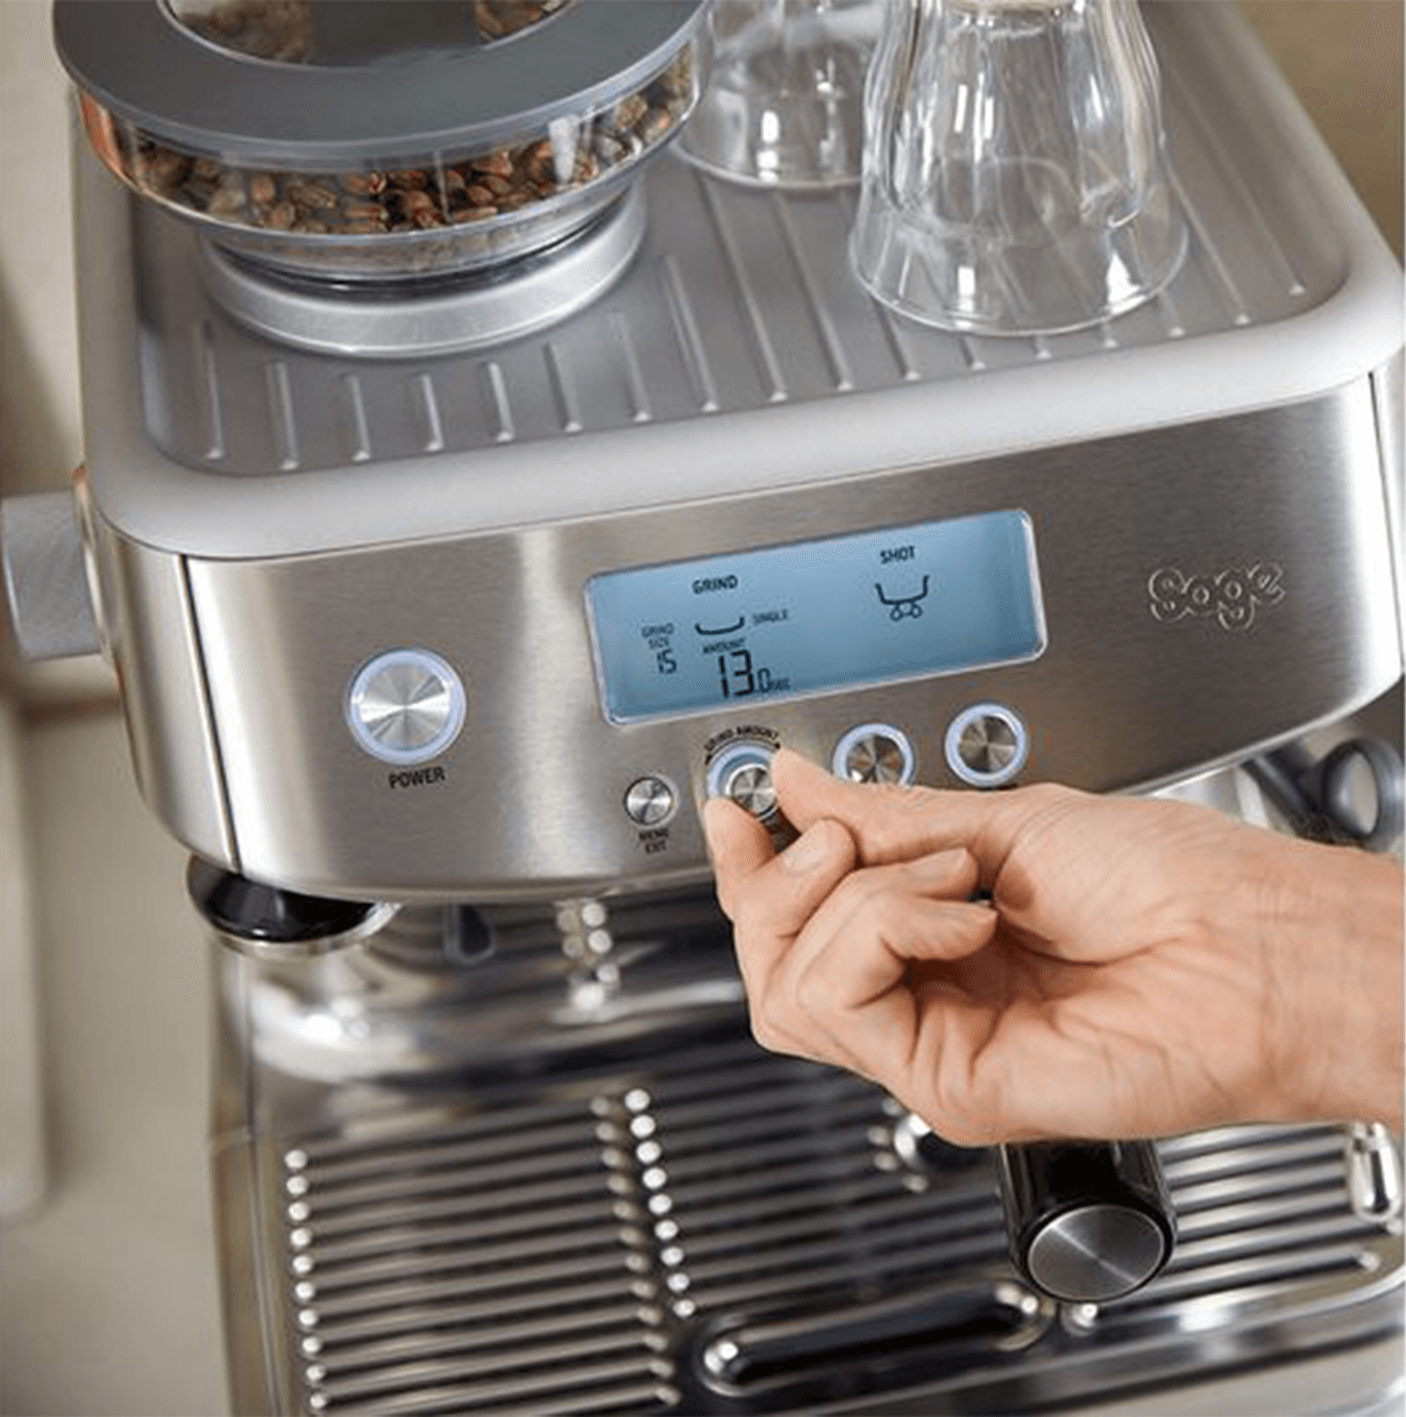 SAGE Barista Pro coffee machine SES878BSS